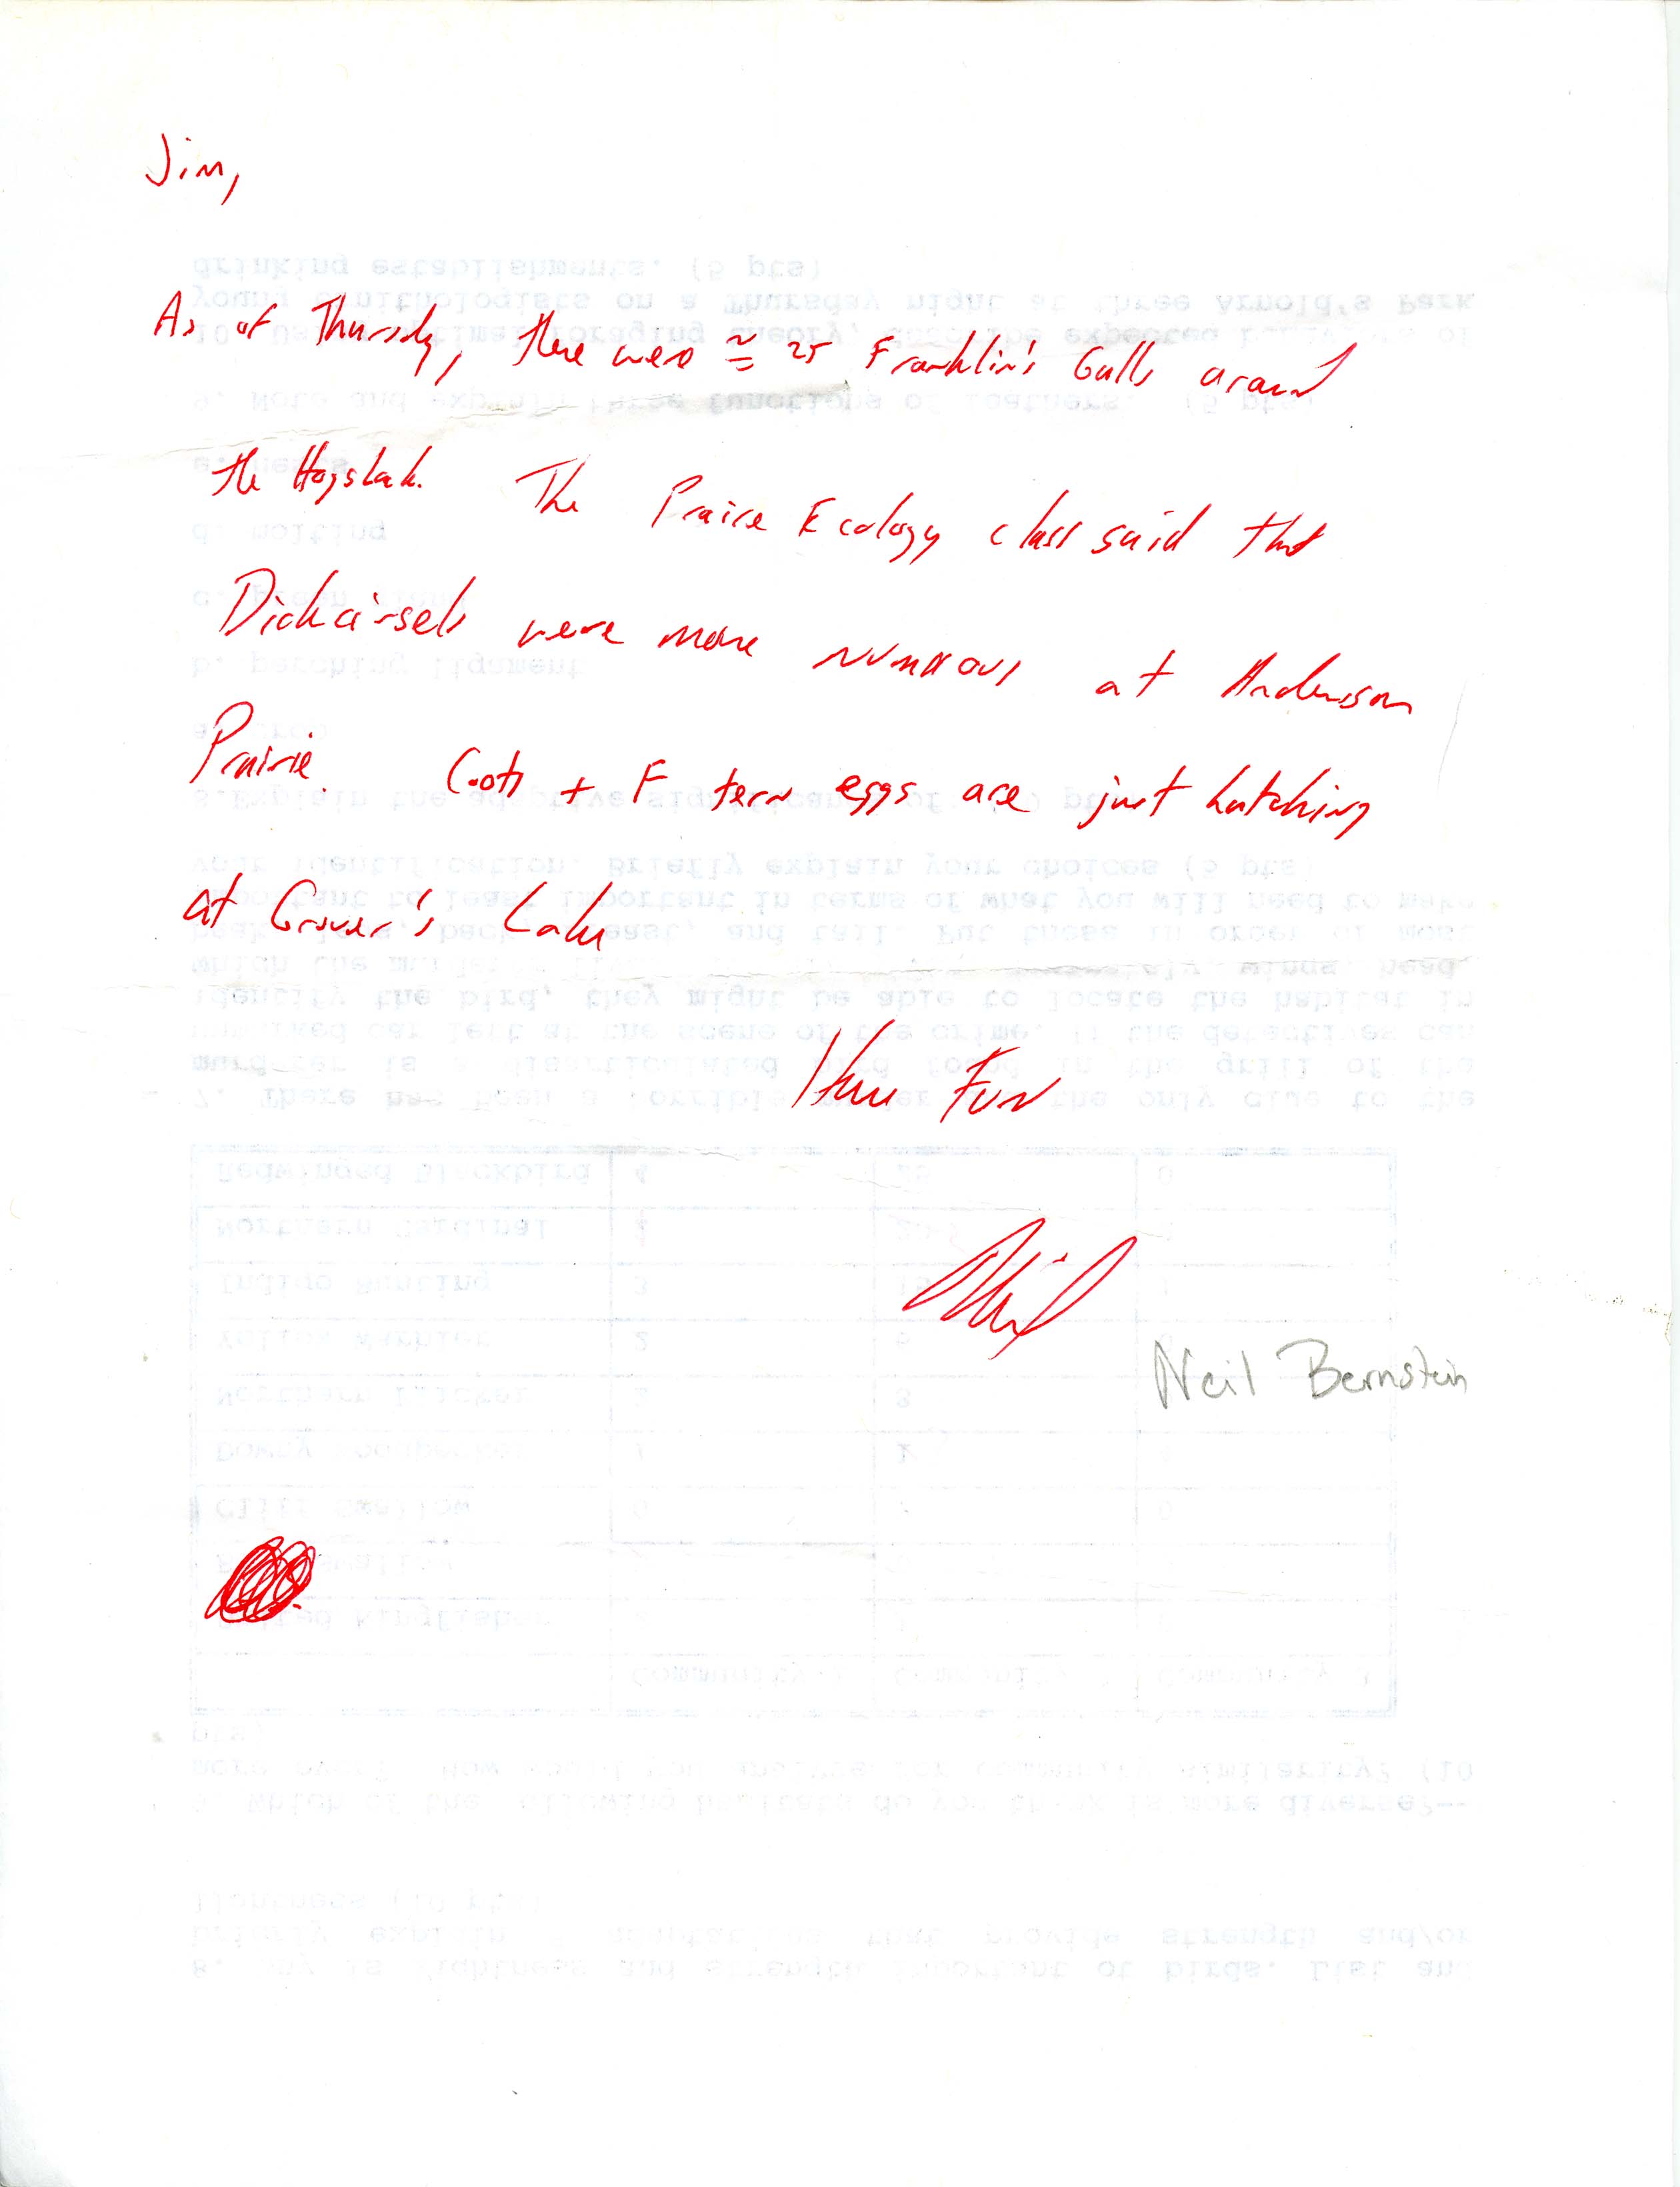 Neil Bernstein letter to James J. Dinsmore regarding additional summer bird sightings, summer 1997